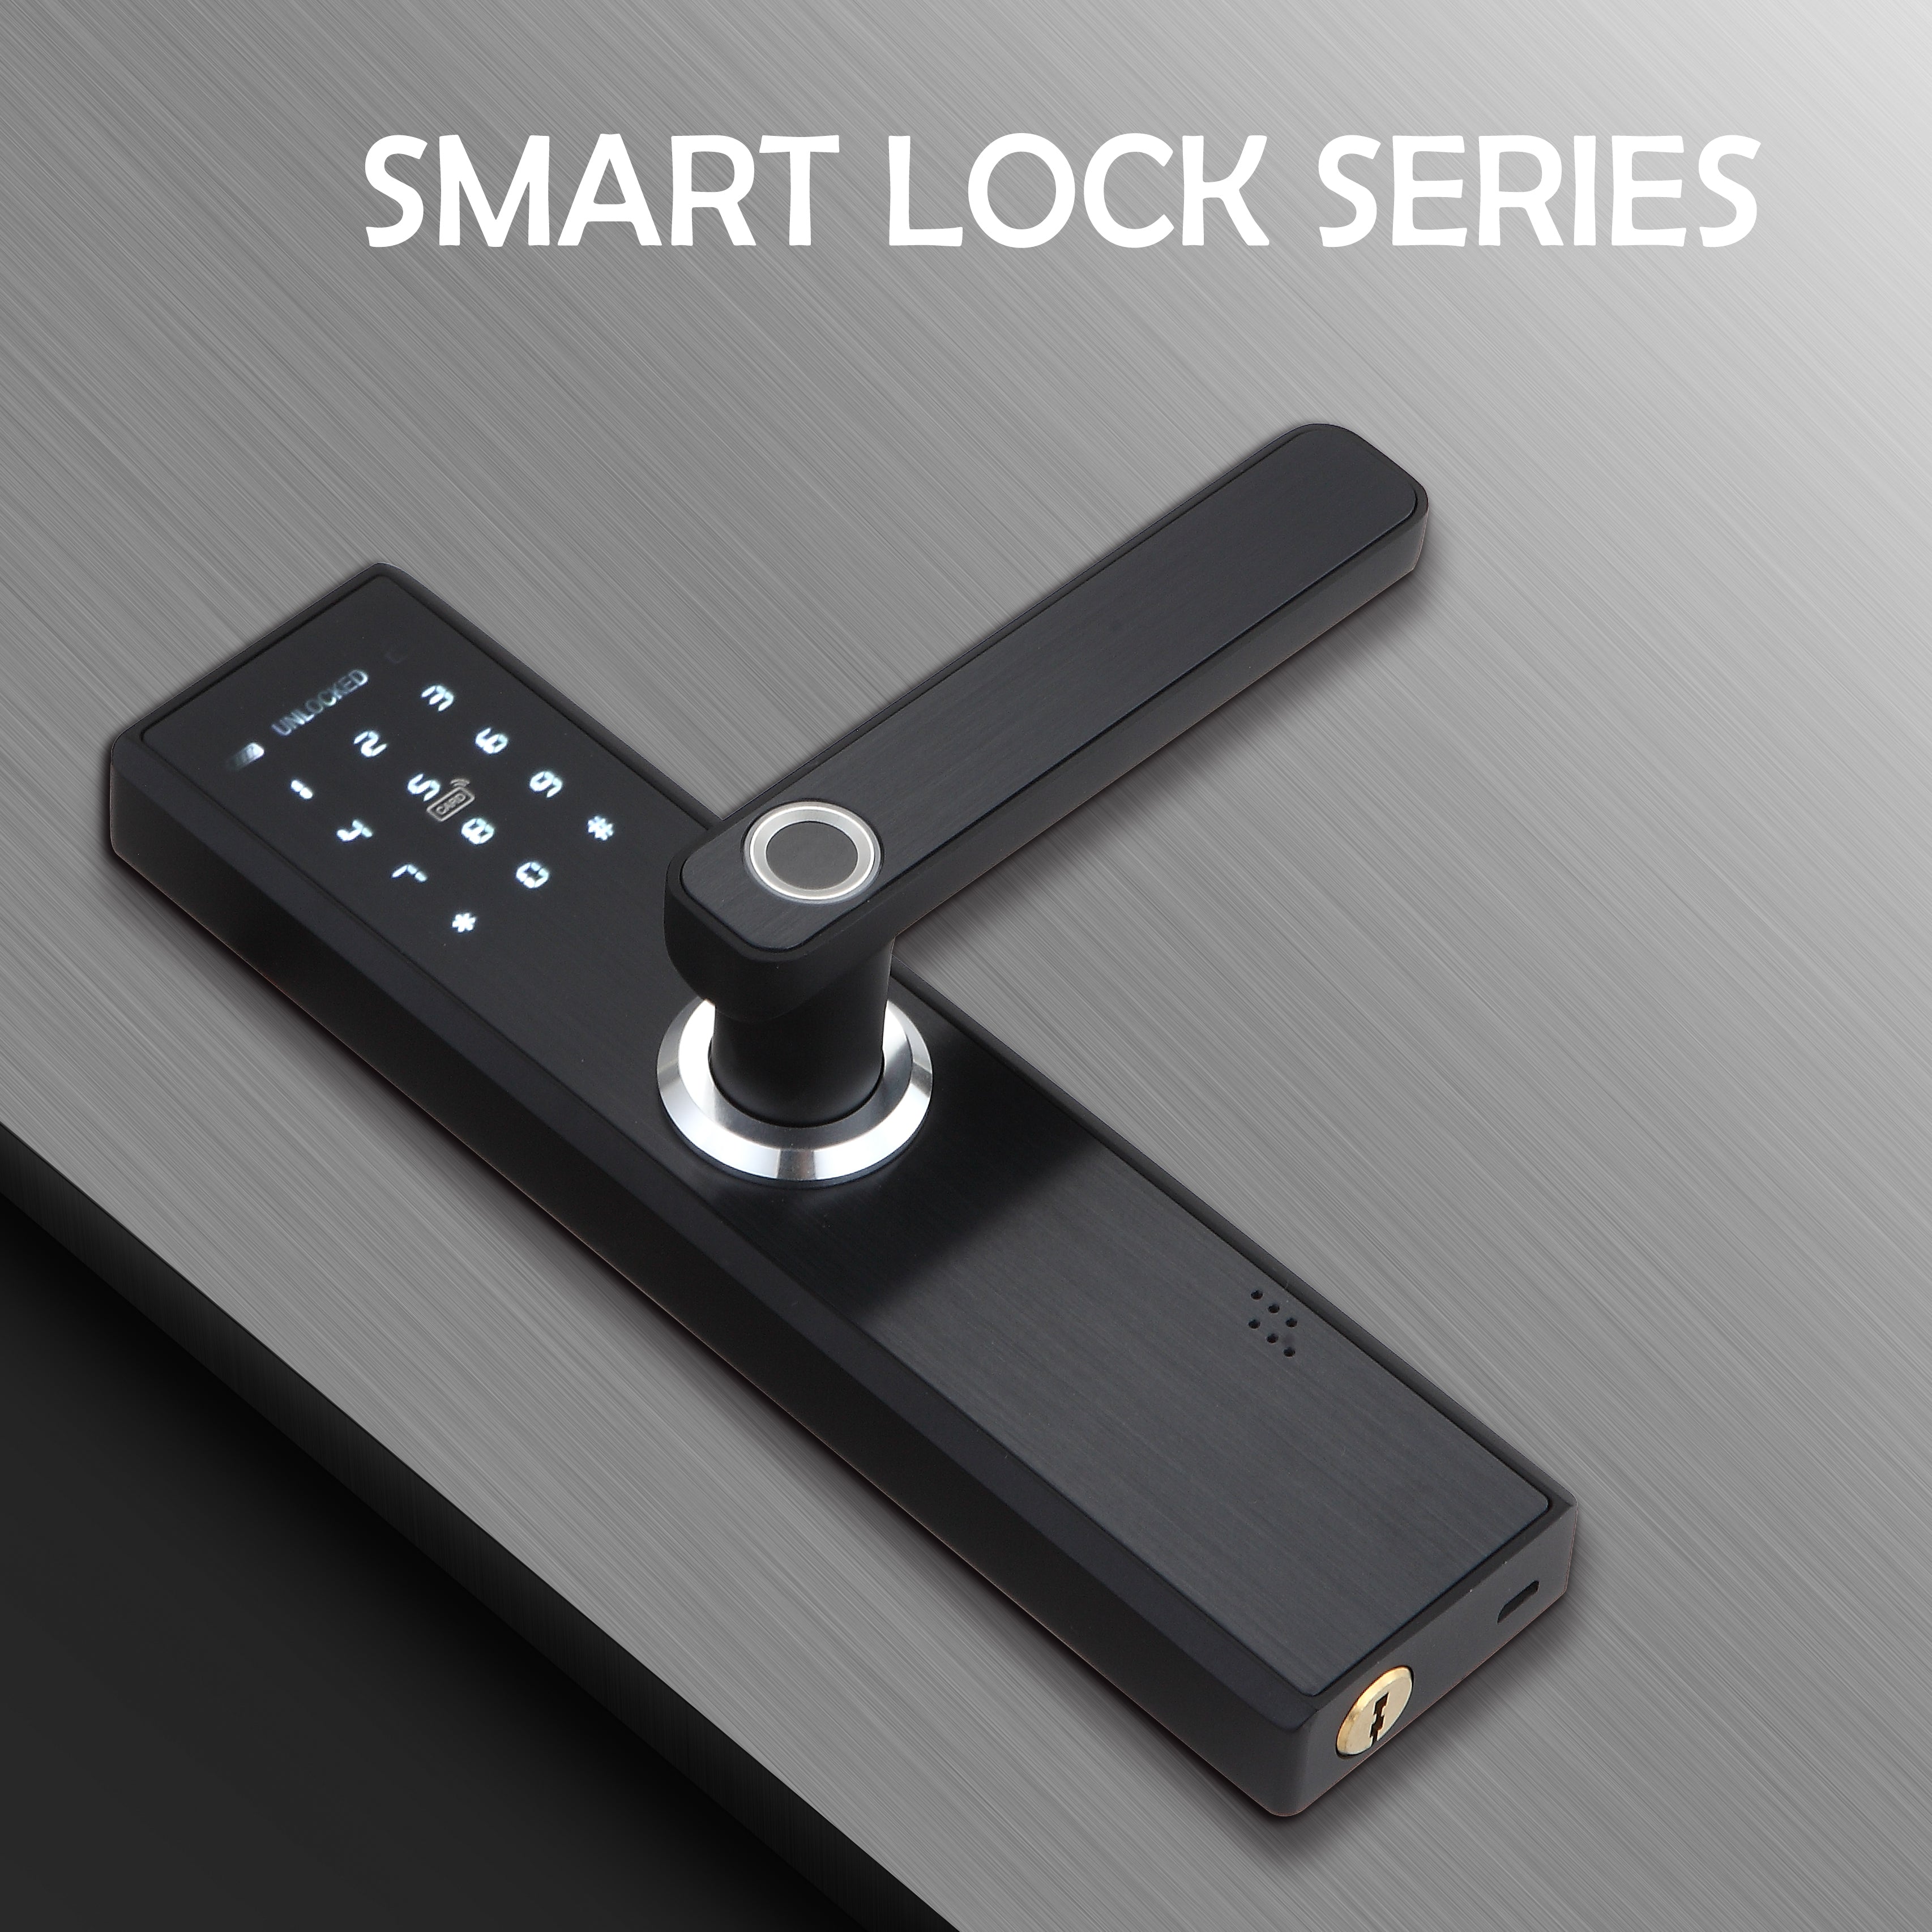 Smart lock series